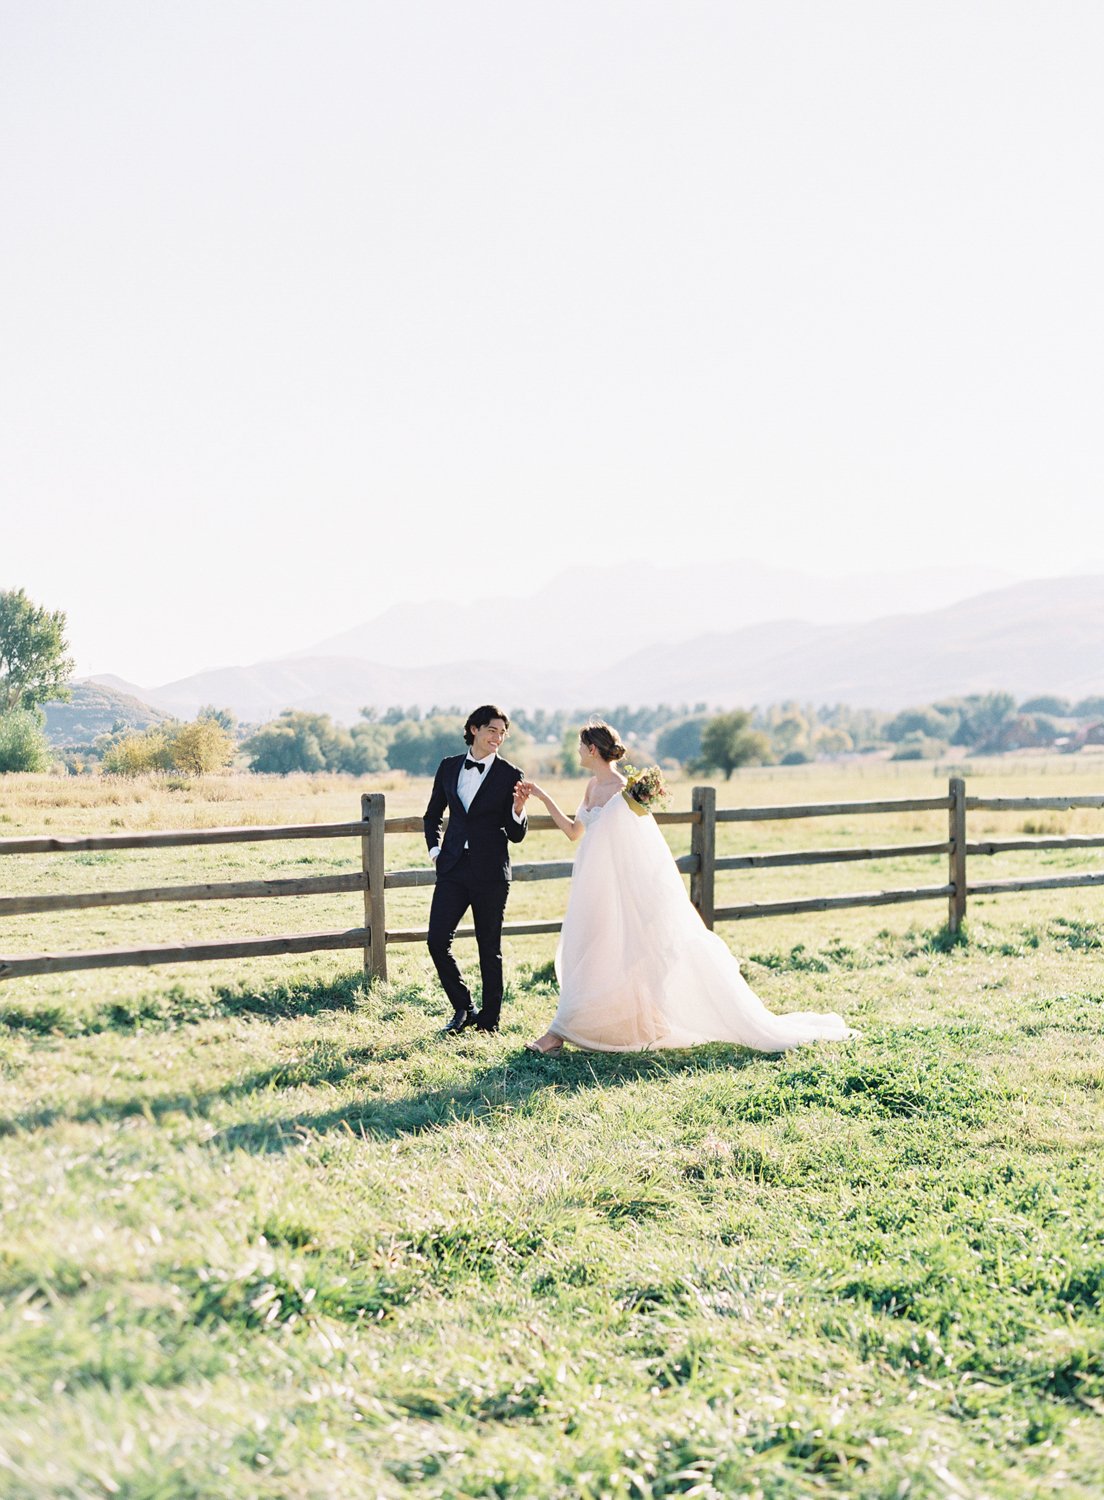 wisteria-photography.com | Wisteria Photography | Flower Filled Ranch Wedding | Utah | Featured on Wedding Sparrow | Destination Photographer-27.jpg